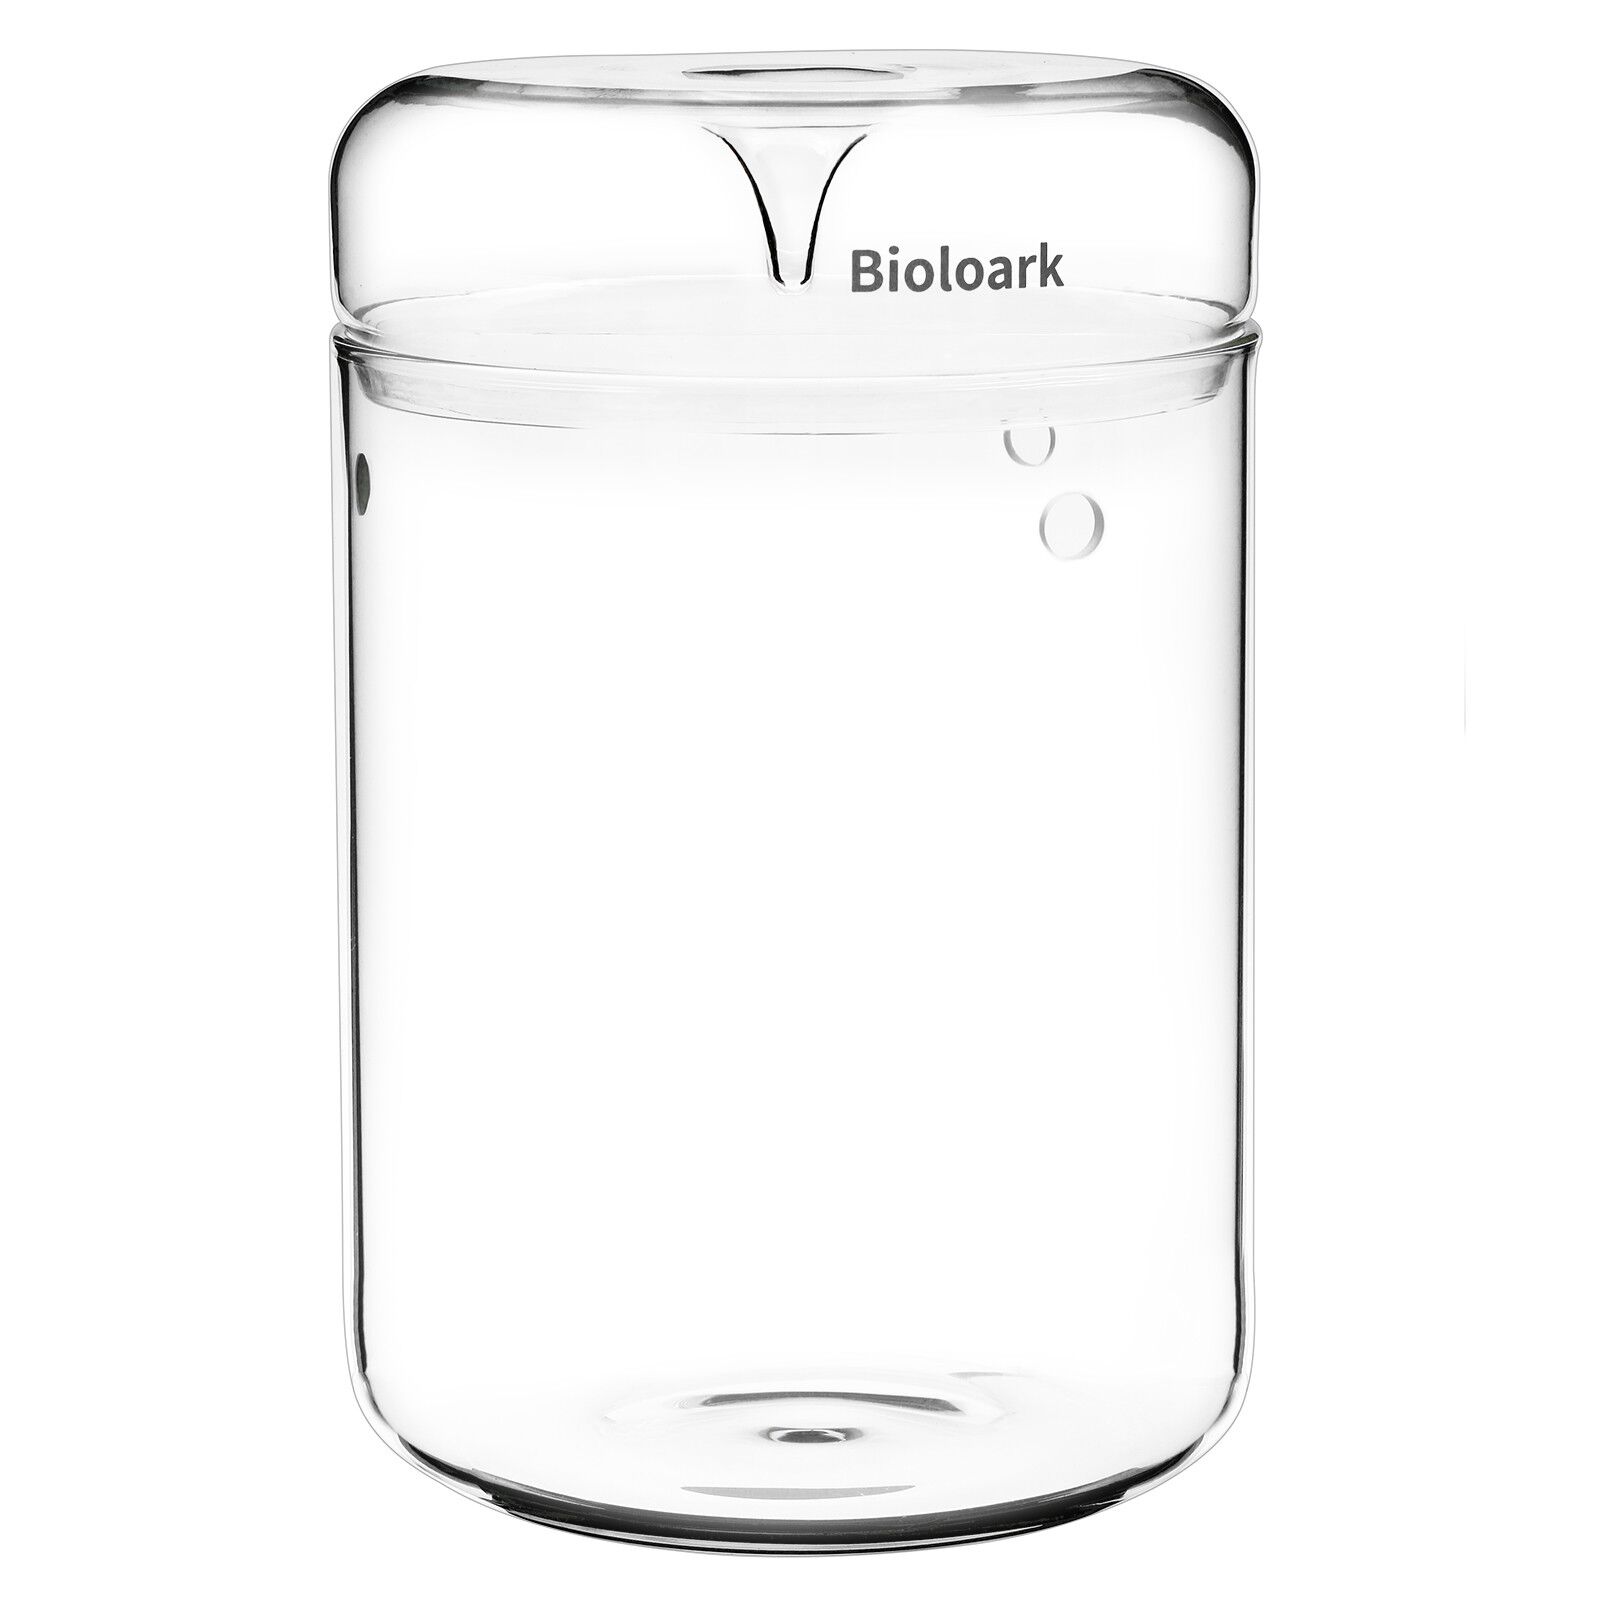 https://www.aquasabi.com/media/image/product/31882/lg/bioloark-luji-glass-cup-my-150h.jpg